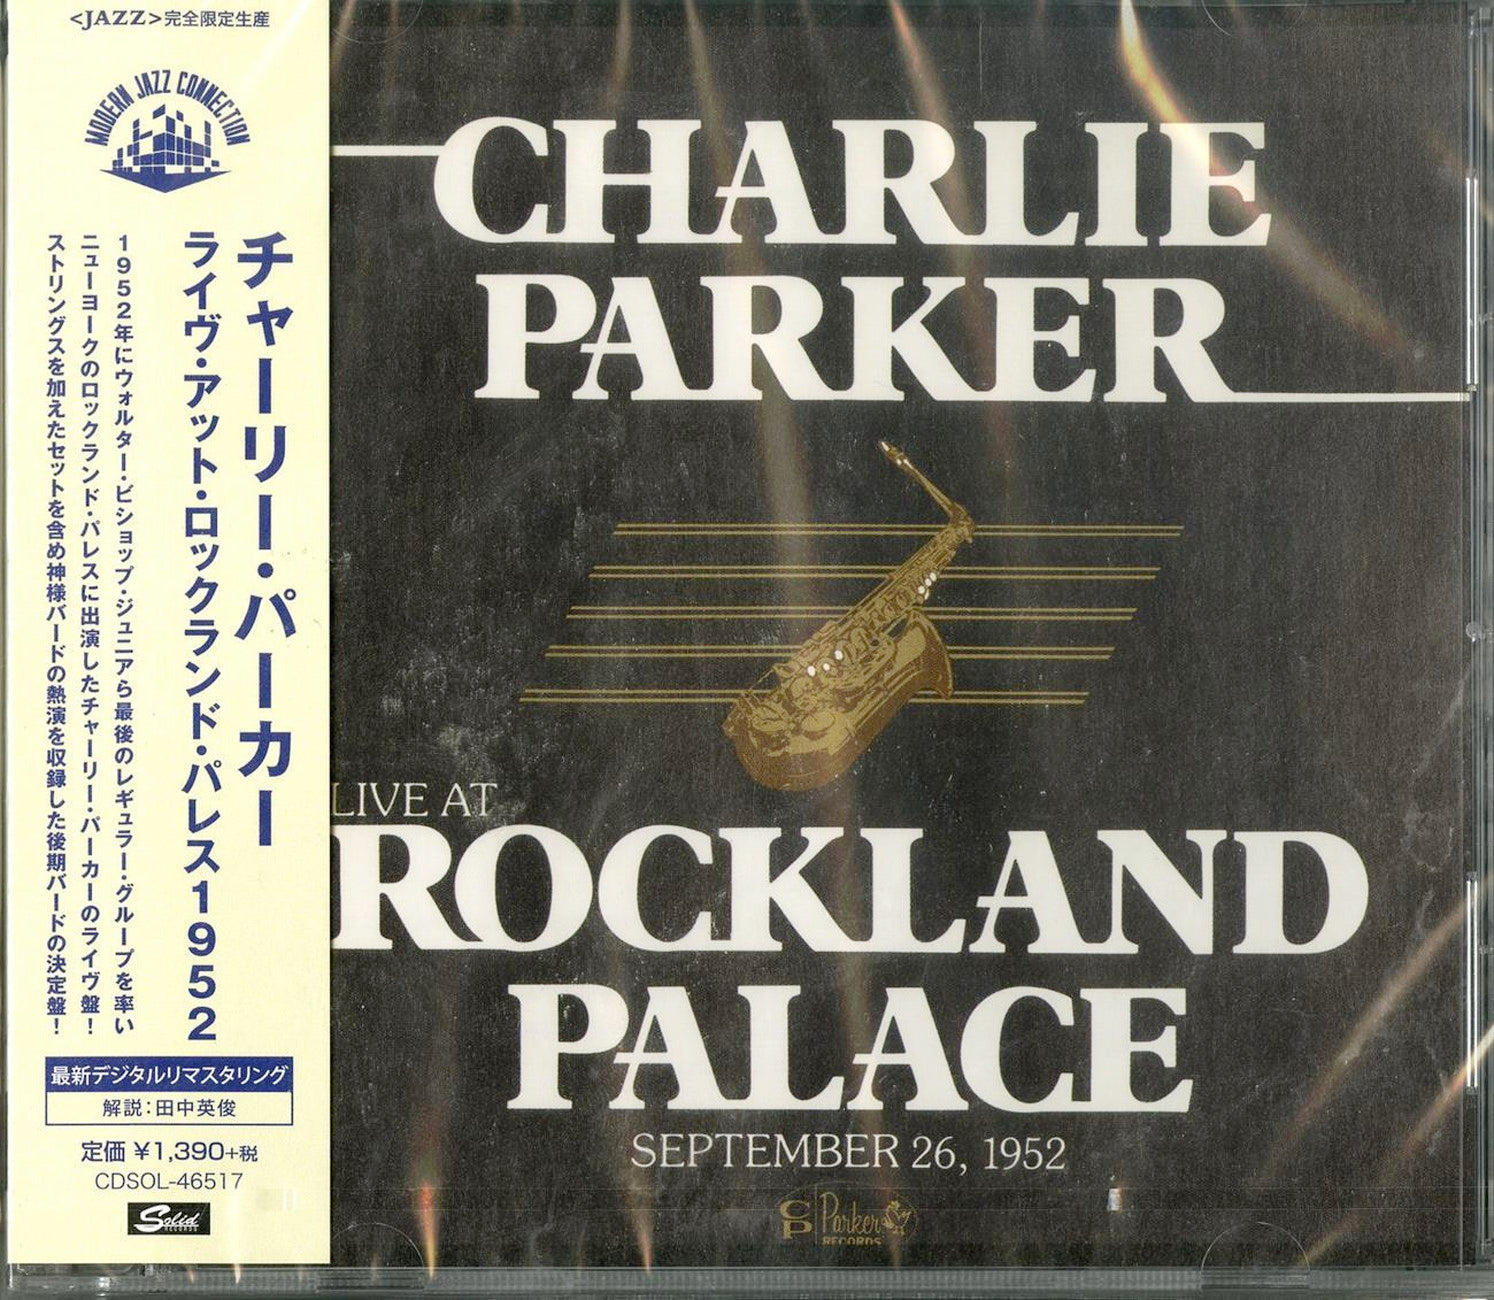 Charlie Parker - Discogs Live At Rockland Palace September 26